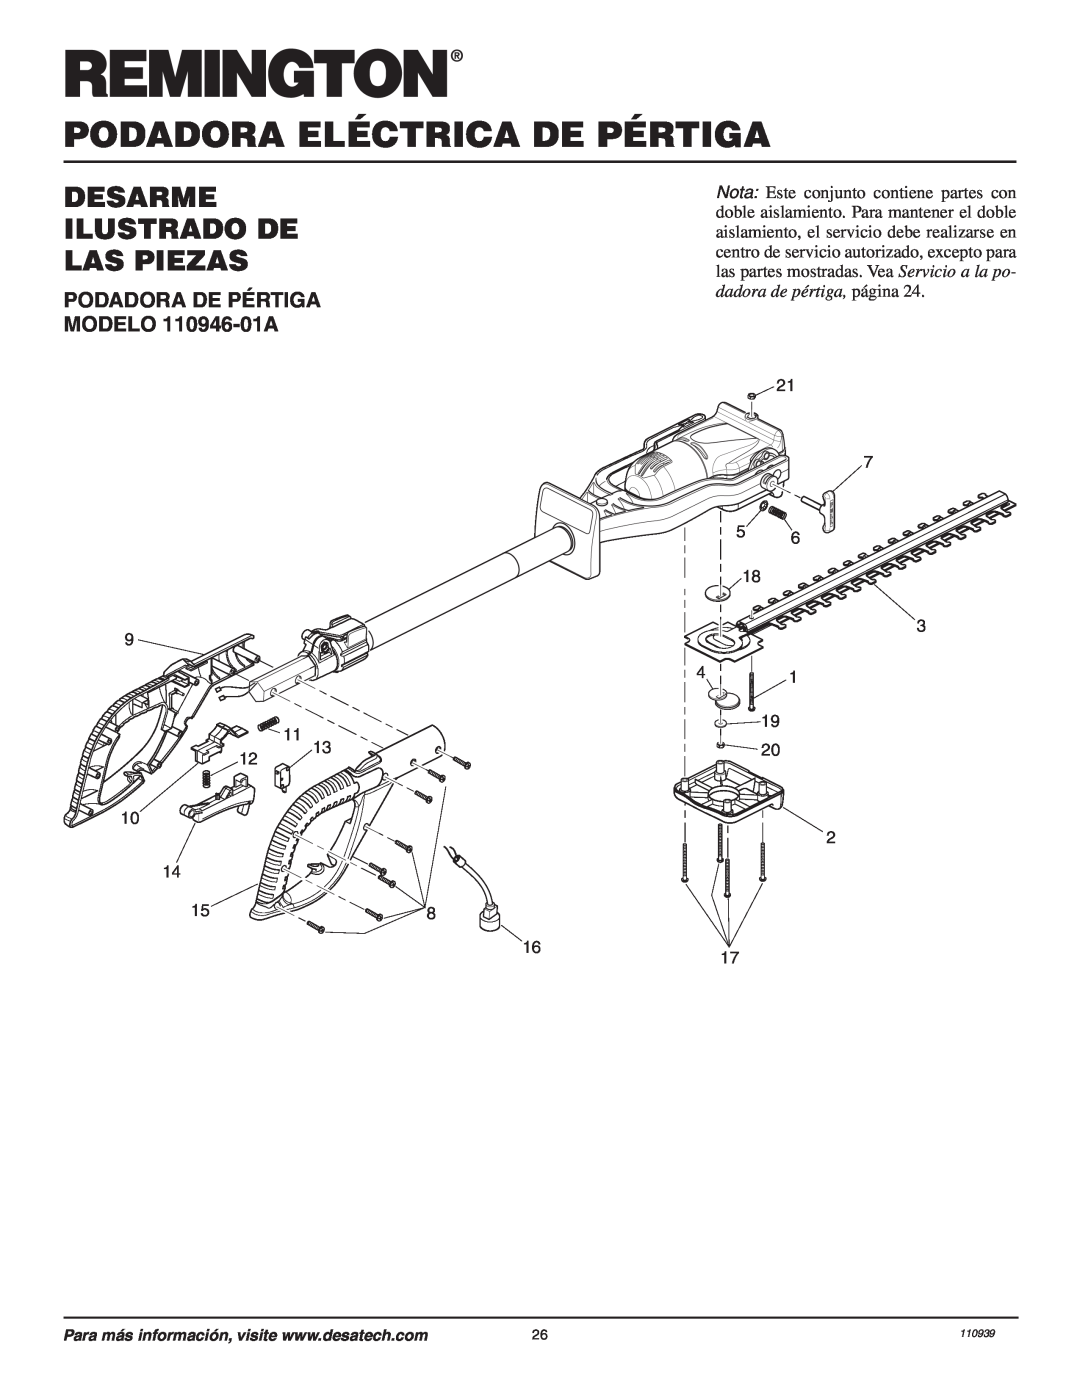 Remington Desarme Ilustrado De Las Piezas, PODADORA DE PÉRTIGA MODELO 110946-01A, Podadora Eléctrica De Pértiga, 110939 